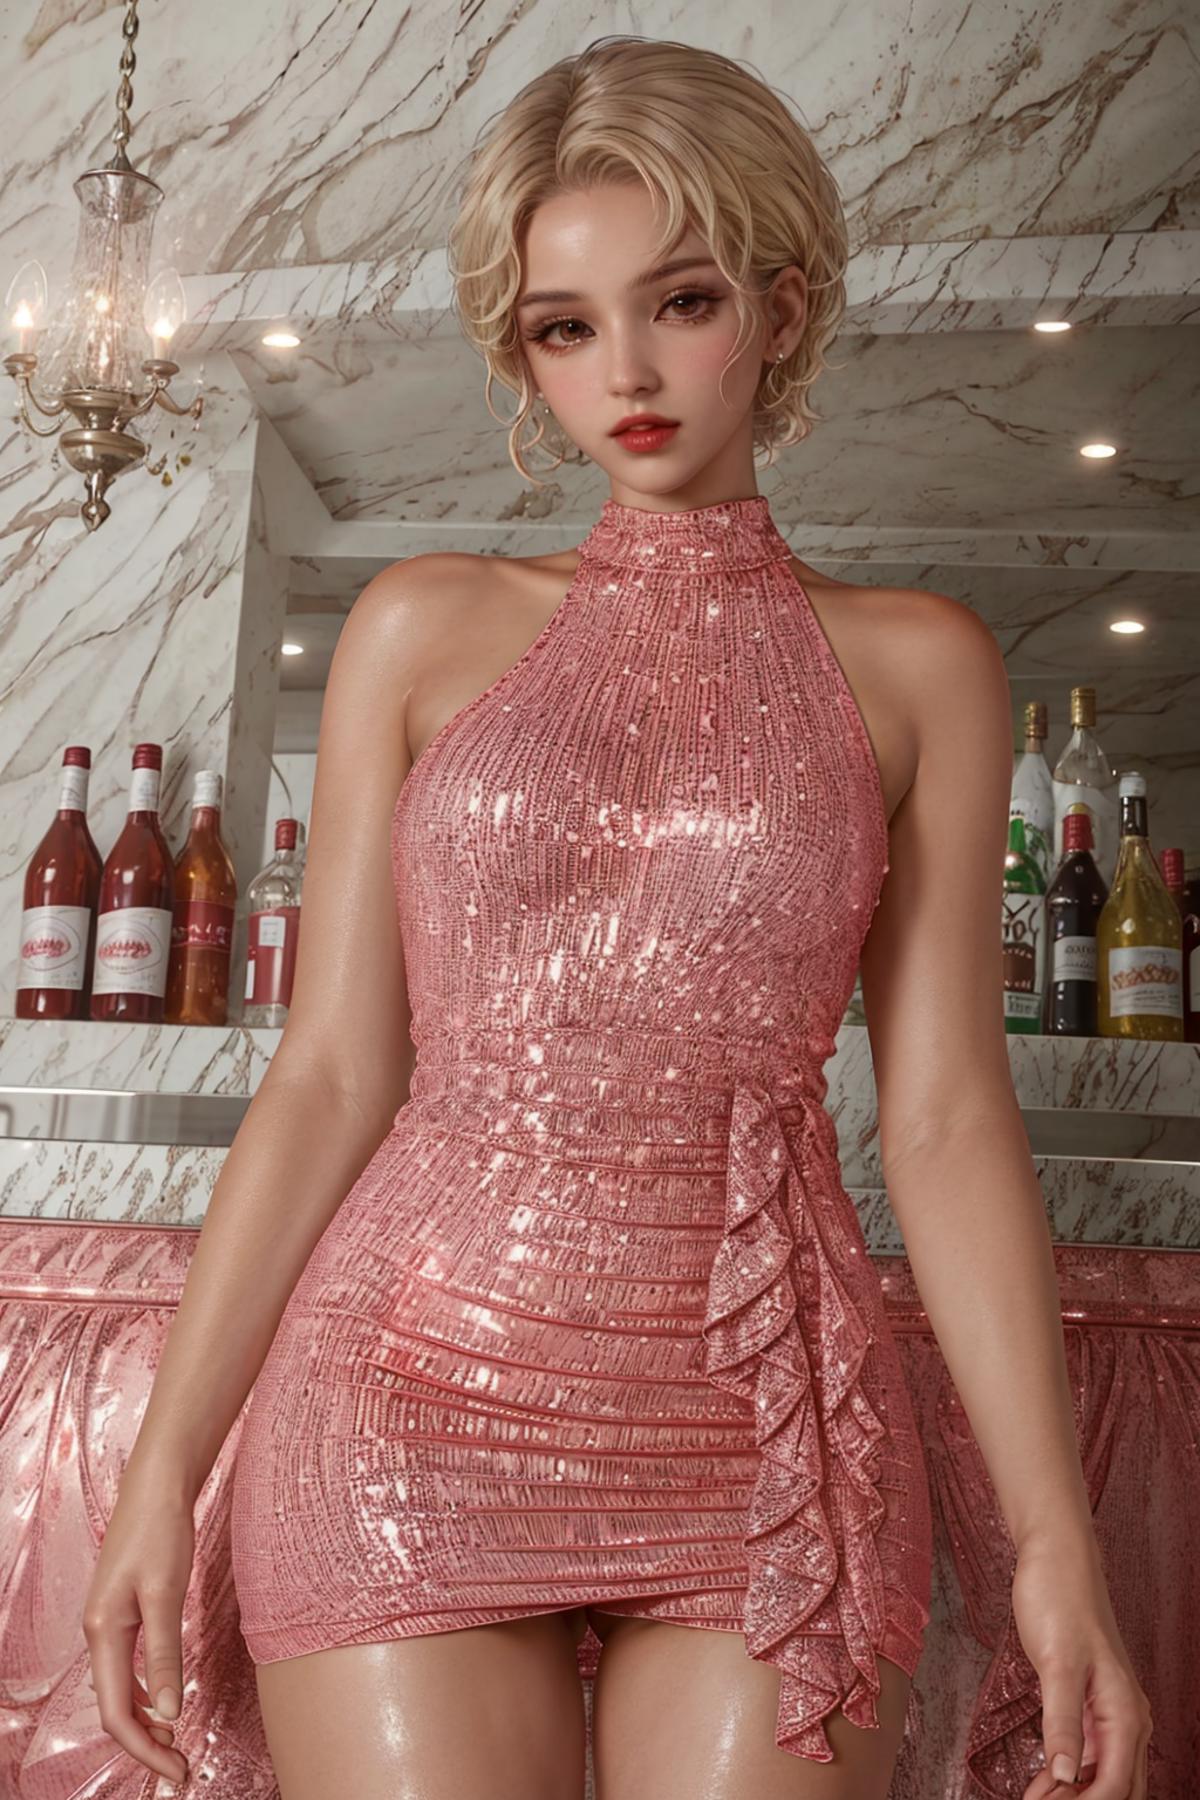 Pink shiny dress №5 image by HADES06